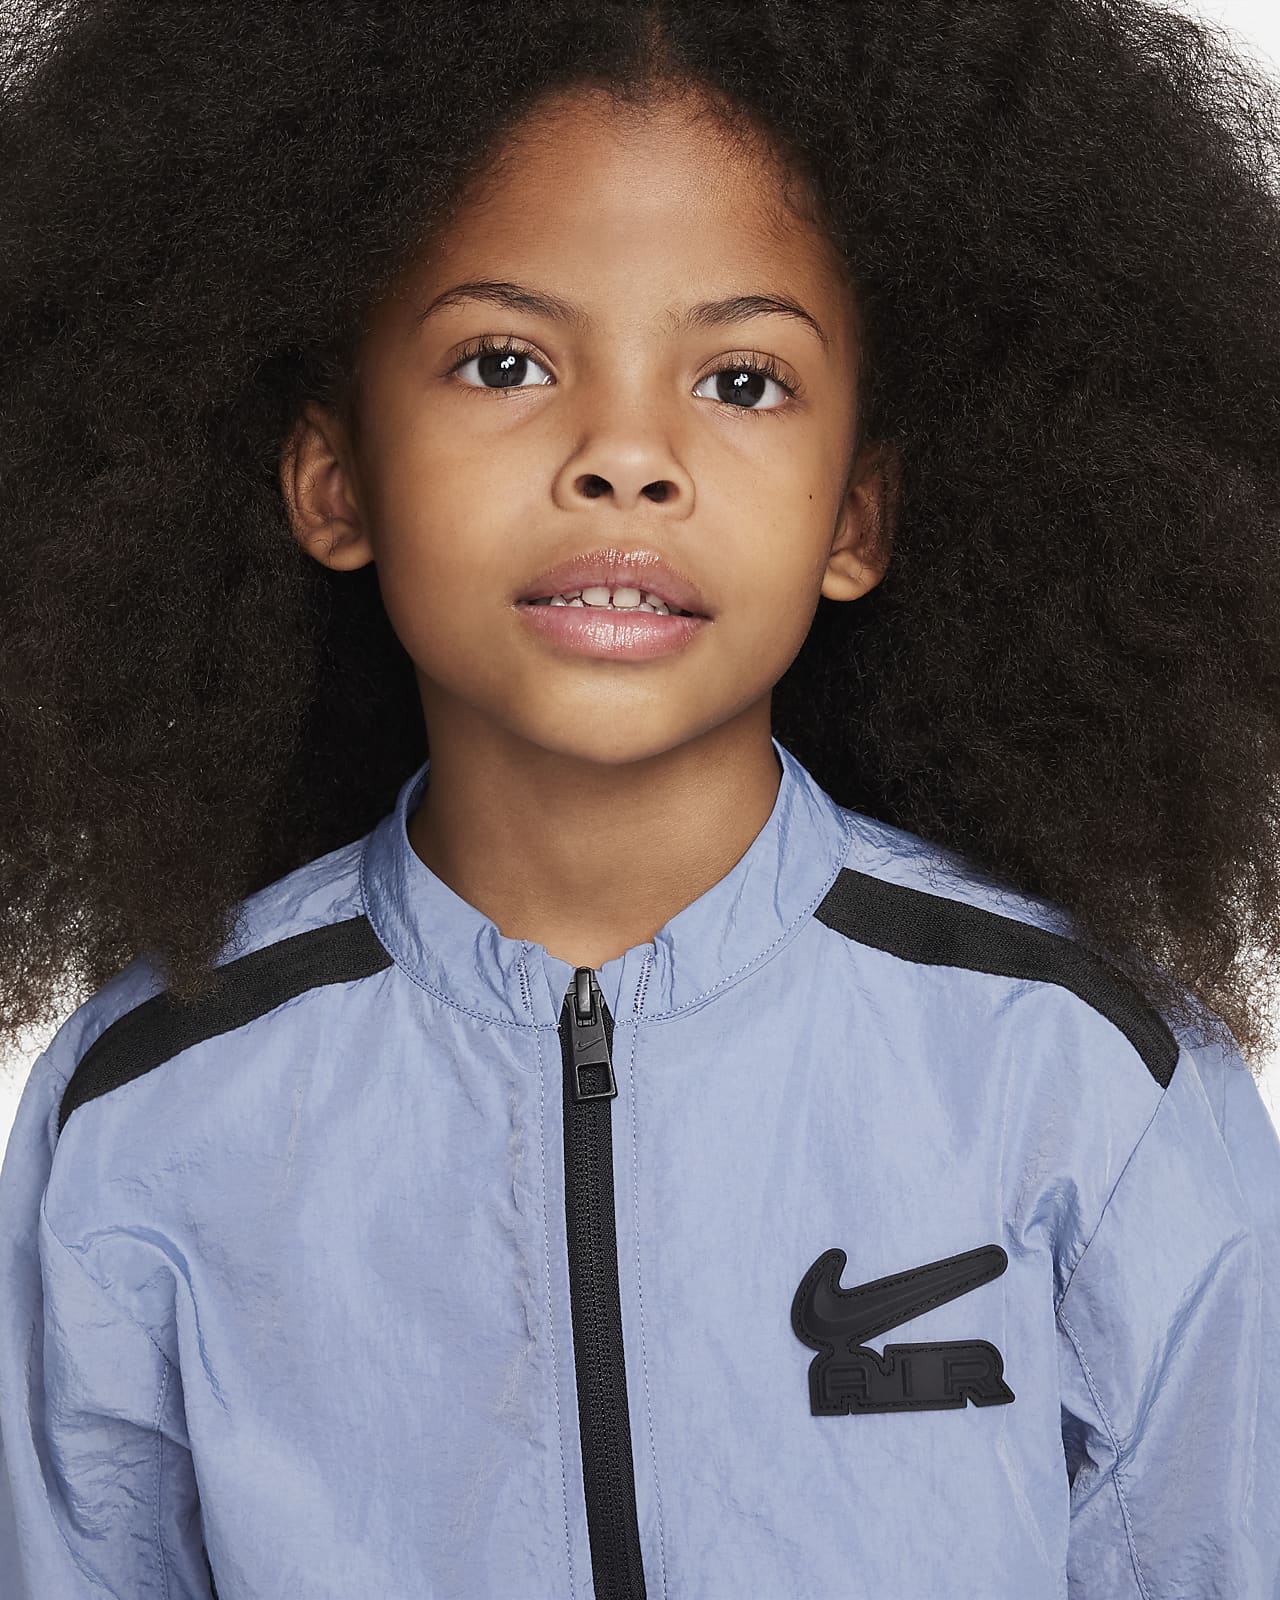 Nike Survêtement à capuche tissé Nike Sportswear pour Homme Blanc- JD  Sports France